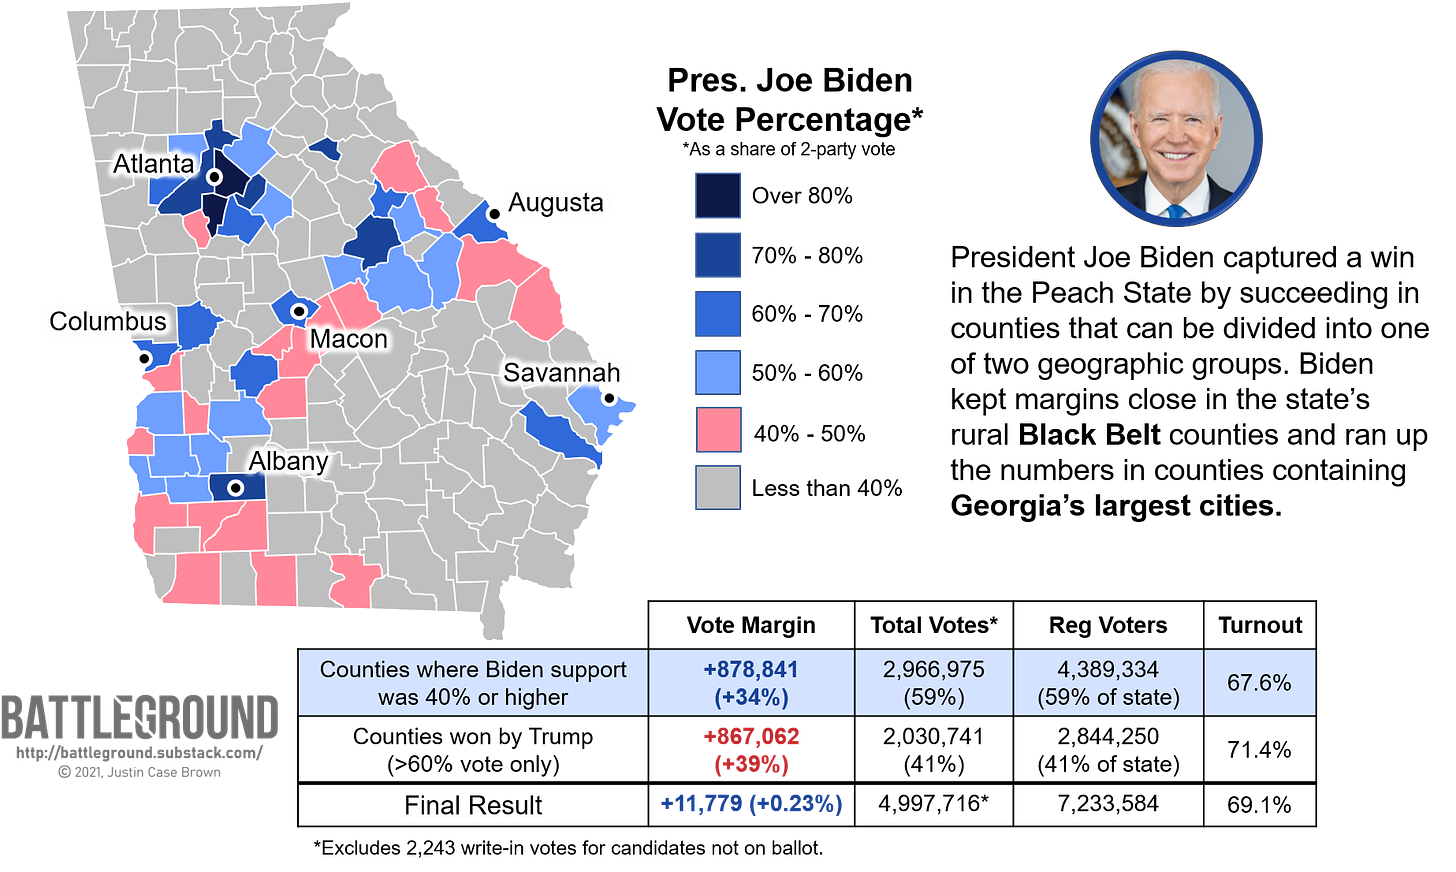 Joe Biden's base of support in the 2020 presidential election in Georgia